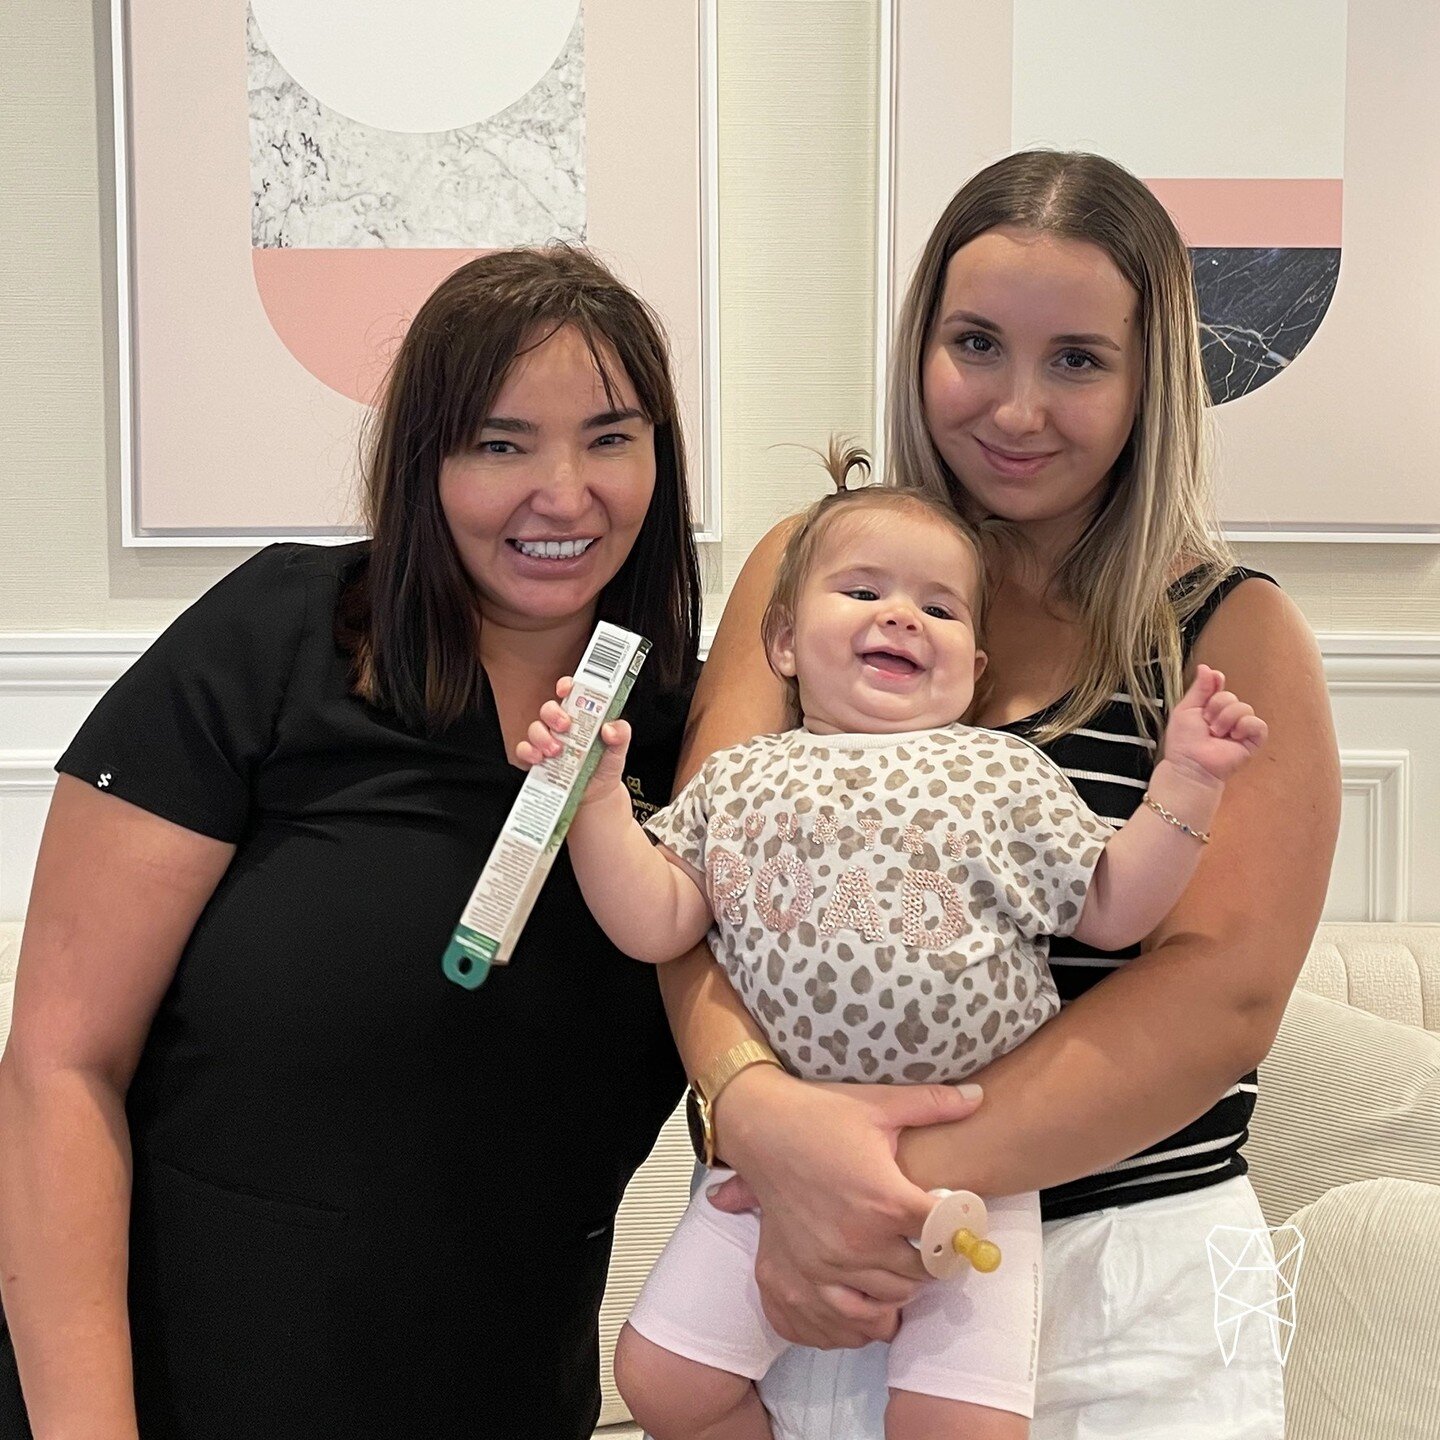 Smiles all round with our superstar hygienist Pia and Oznur with baby Thalia 🦷✨️Thank you visiting @paramountdentalsydney!⁠
⁠
#healthisparamount #paramountlife #paramountdental #patientsoftheweek #smileoftheday